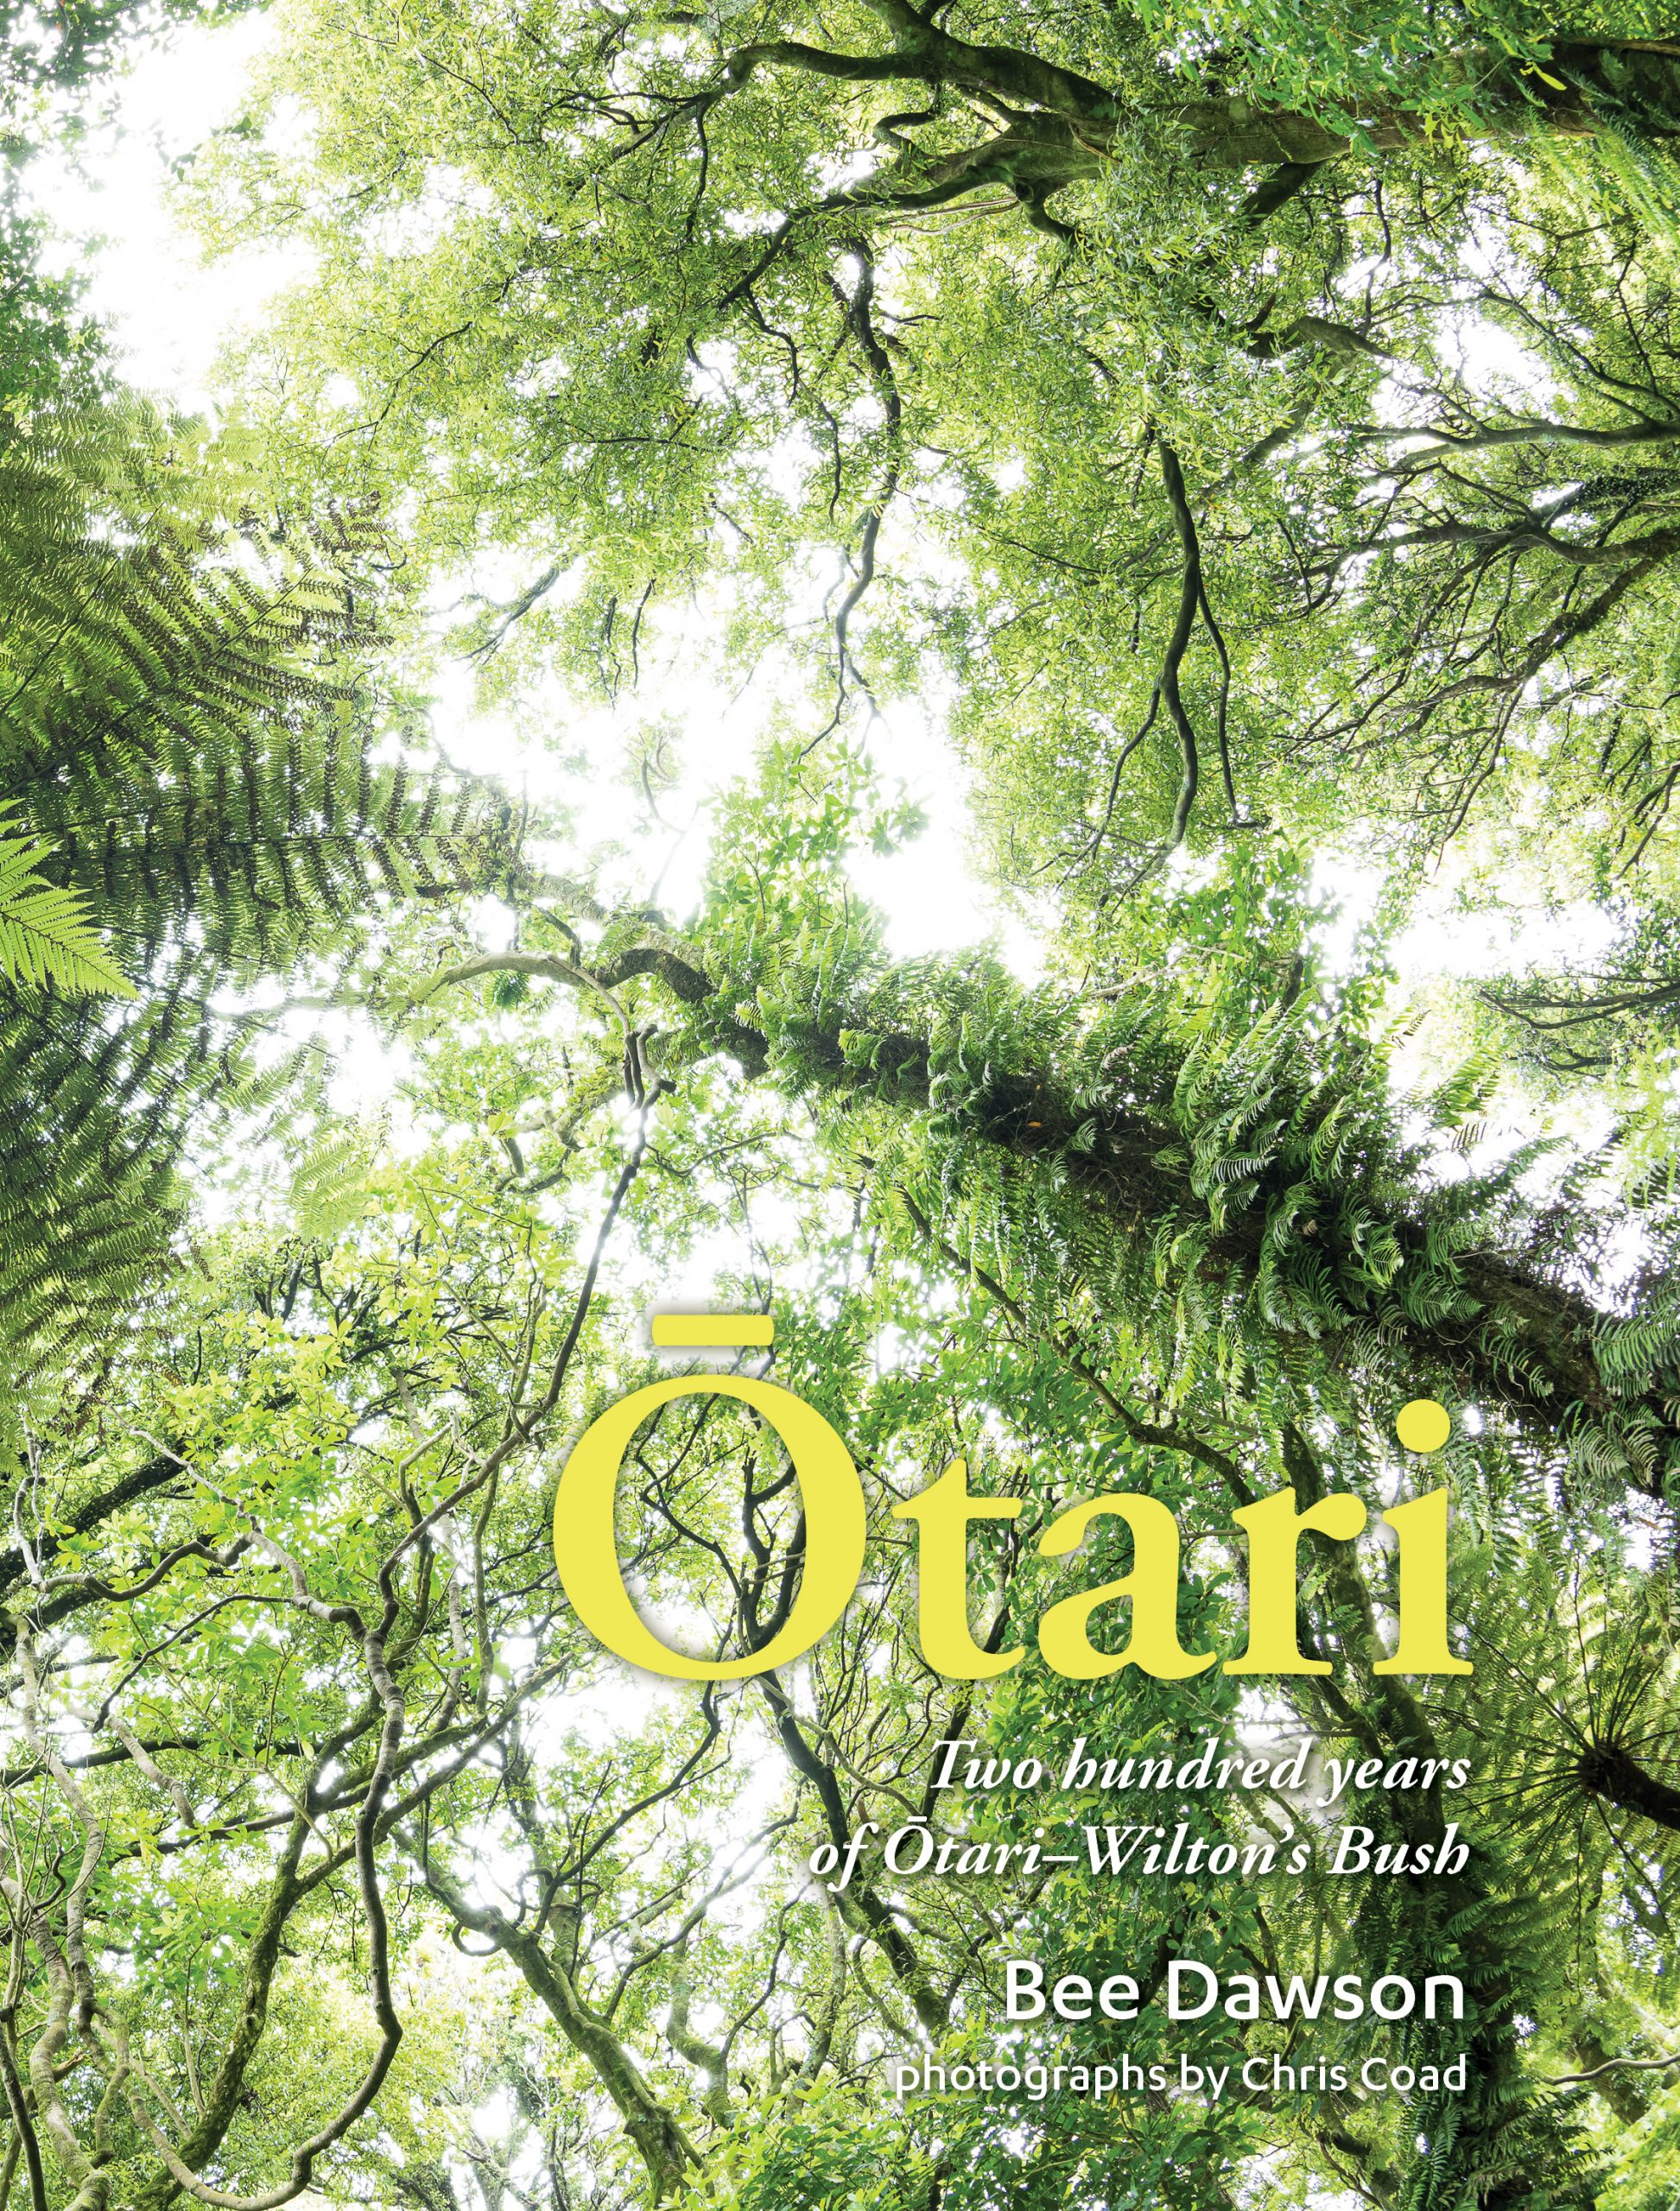 New Zealand’s botanical heroes revealed in a history of Ōtari-Wilton’s Bush